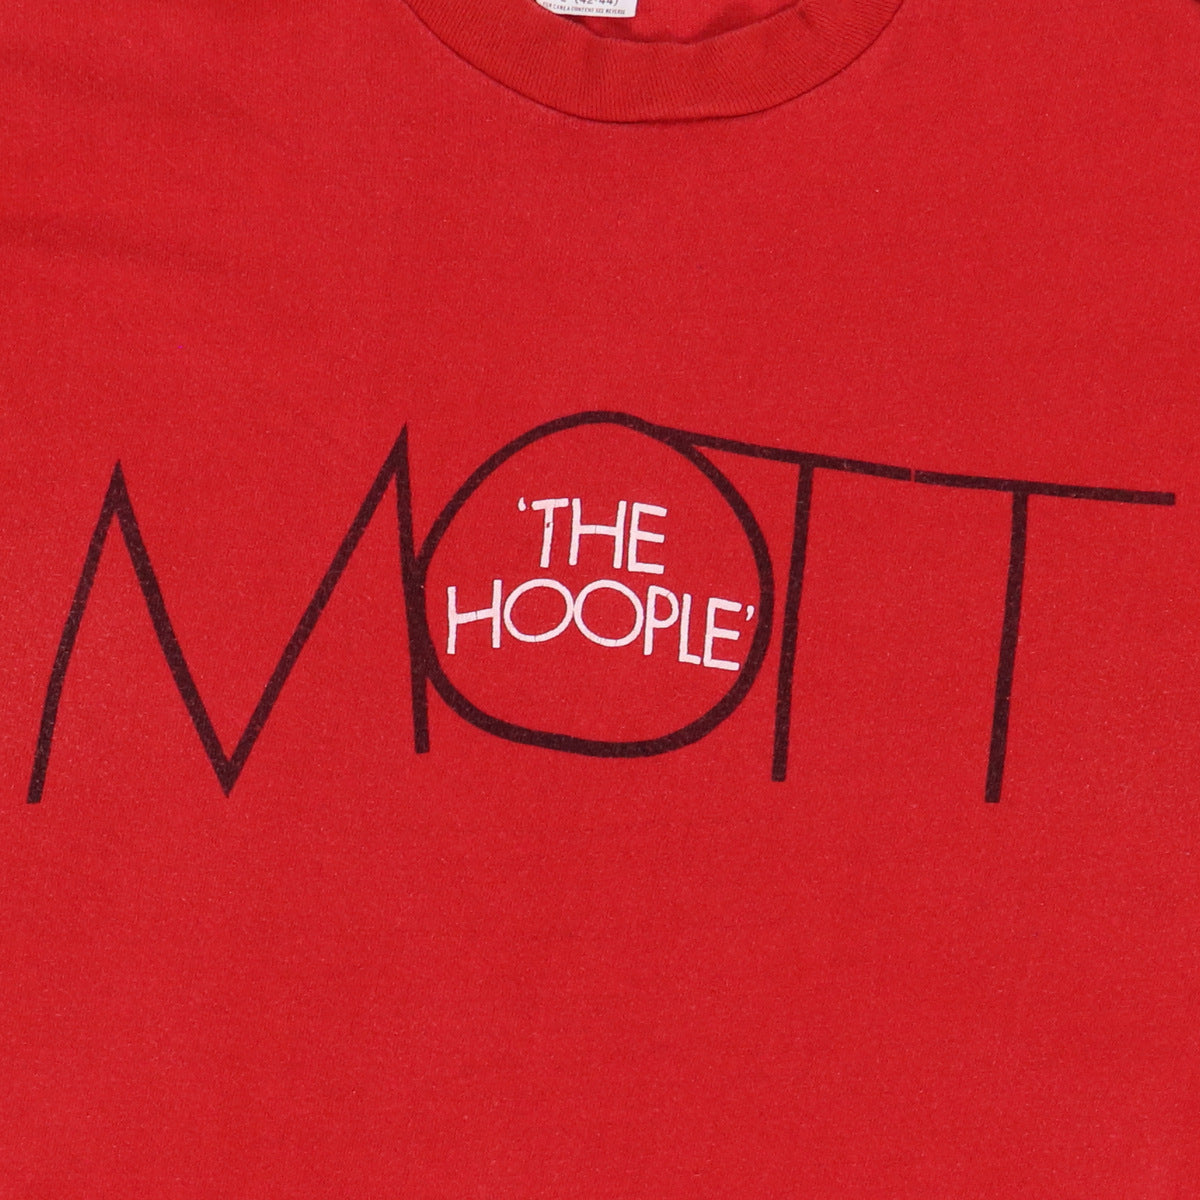 1974 Mott The Hoople Live Promo Shirt